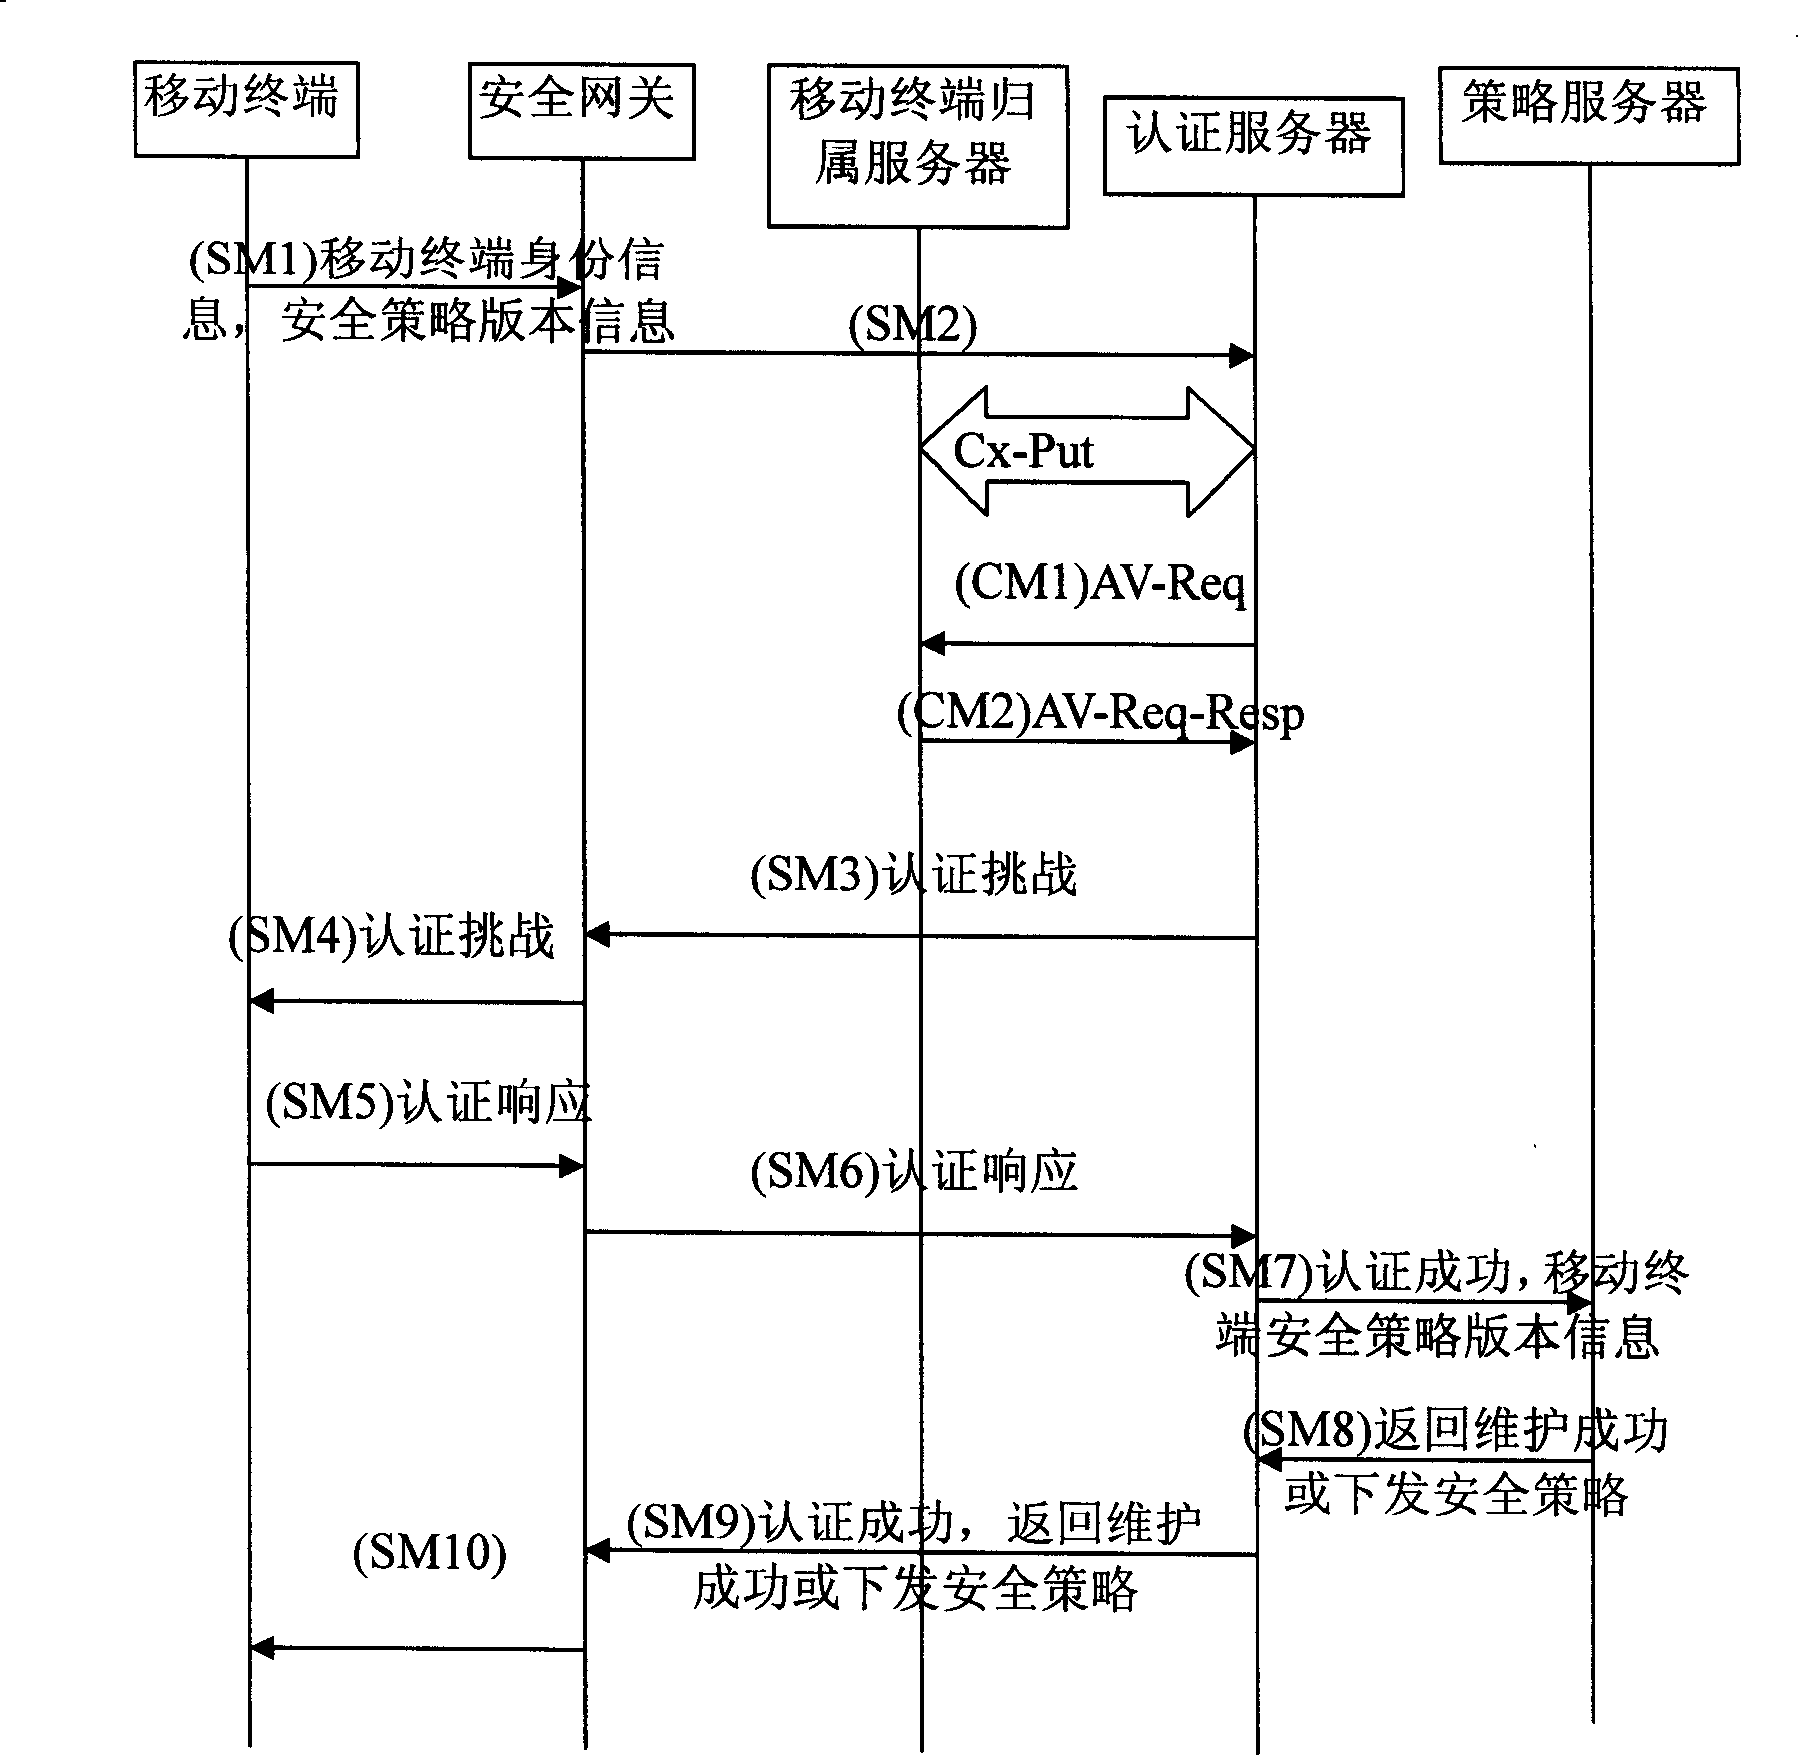 Information distribution method for mobile terminal